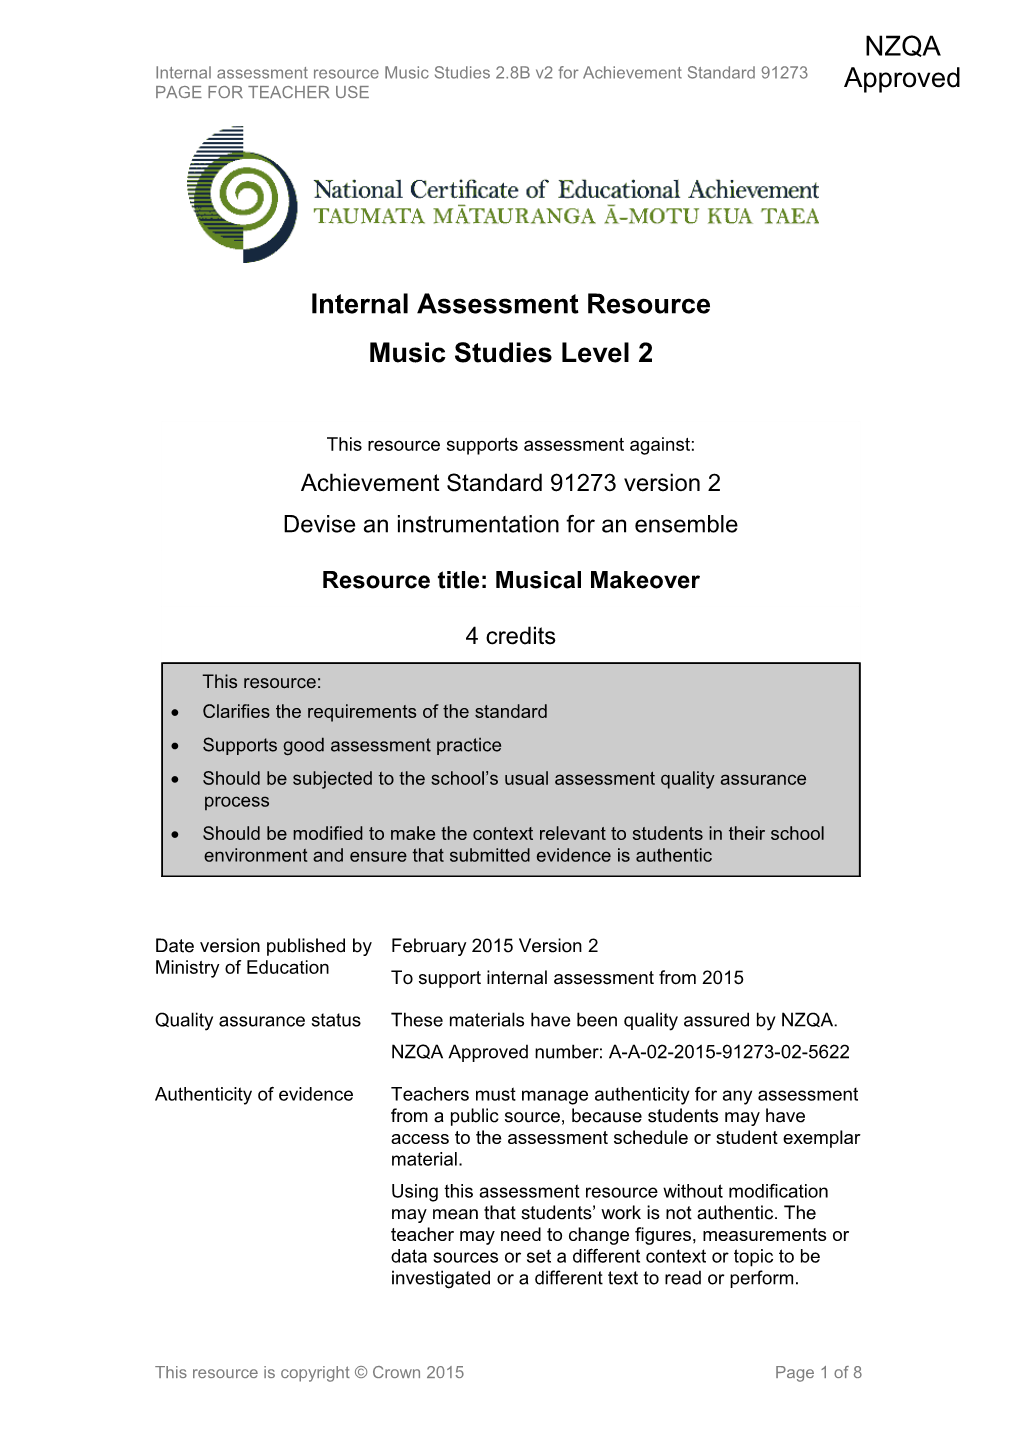 Level 2 Music Studies Internal Assessment Resource